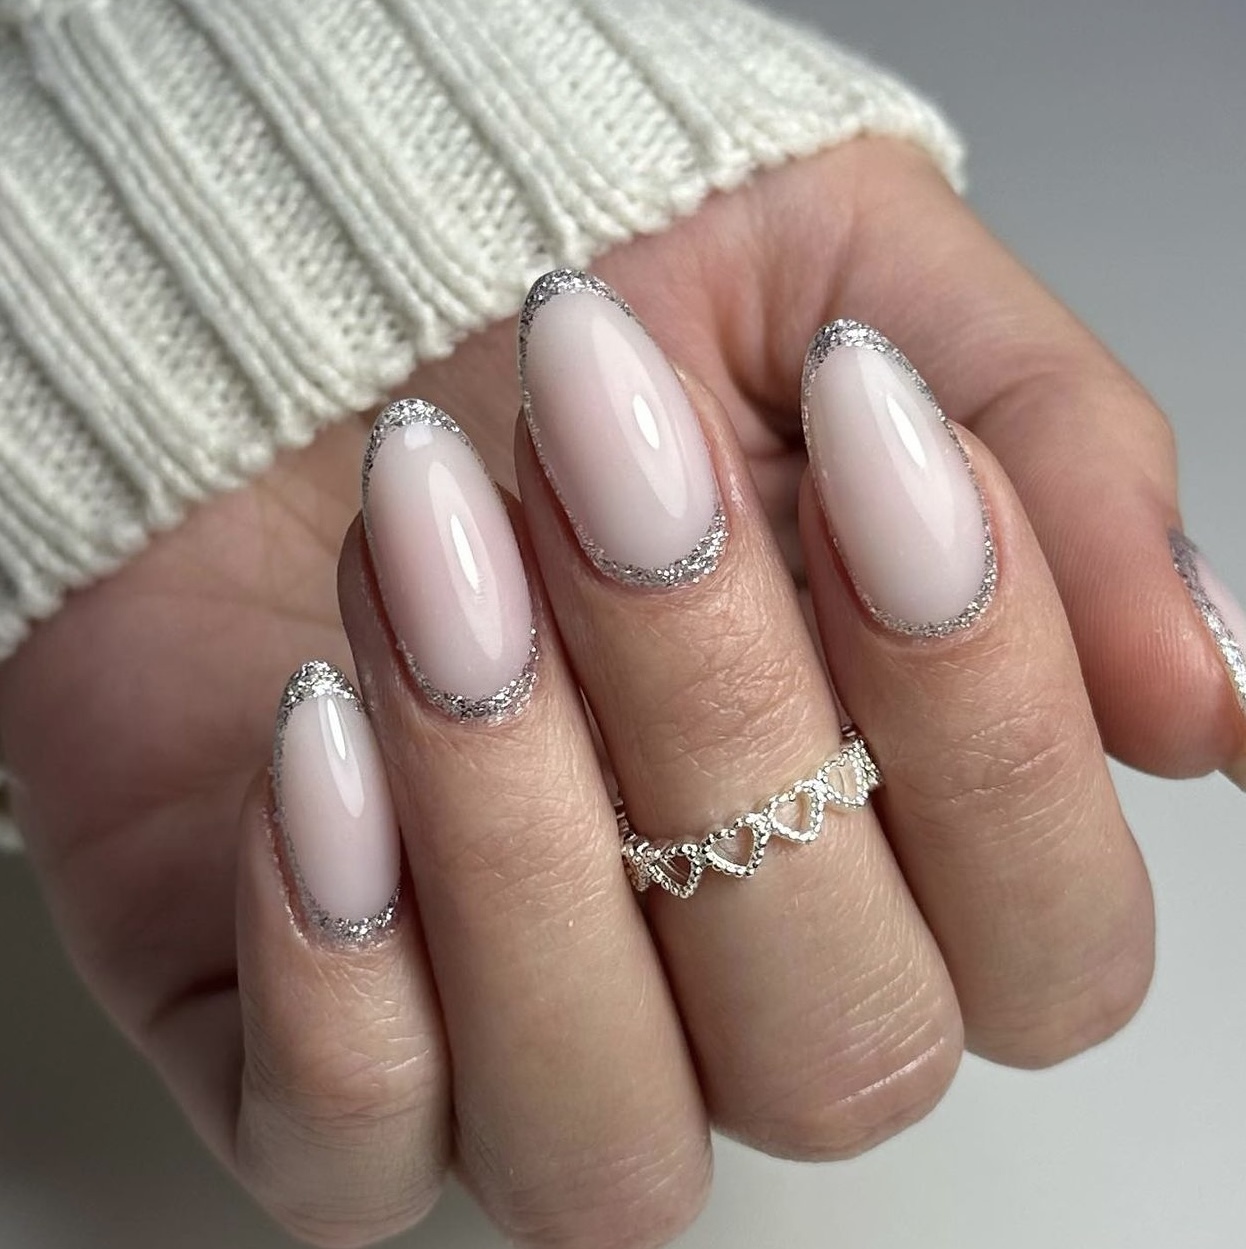 Frosty nails: αυτά είναι τα πιο επίκαιρα “παγωμένα” νύχια